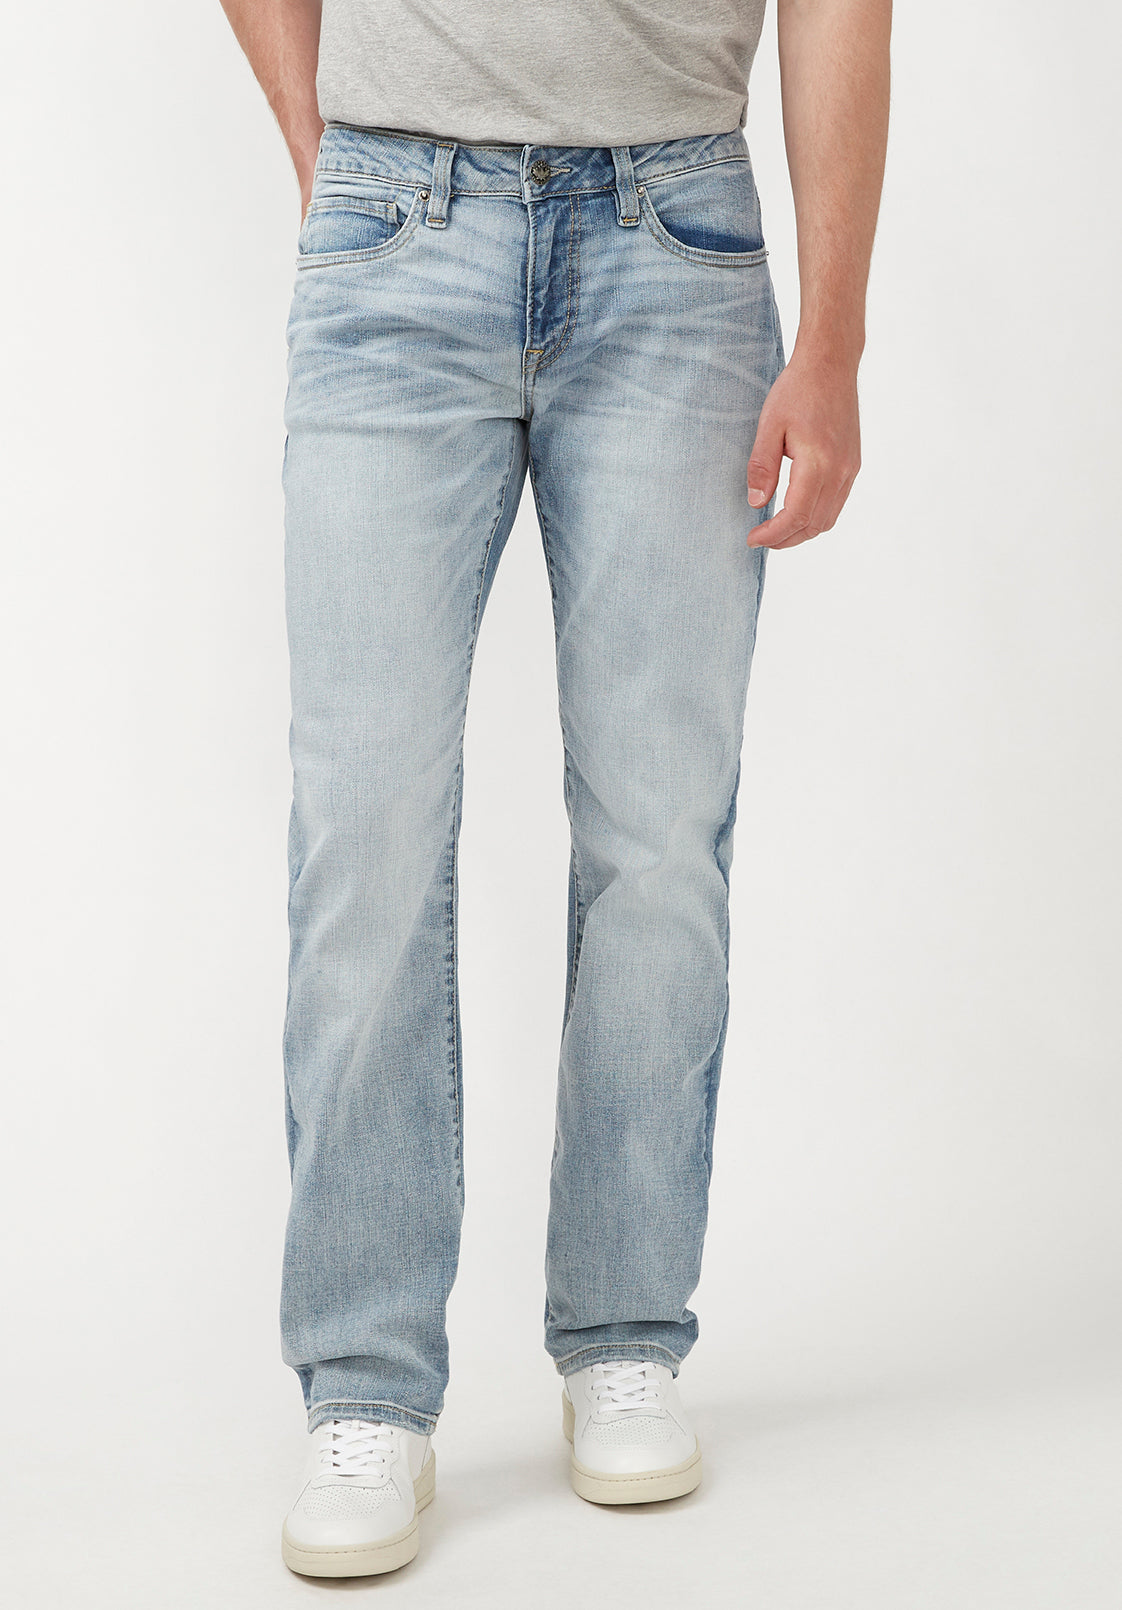 Straight Six Men's Jeans in Crinkled Light Blue – Buffalo Jeans - US